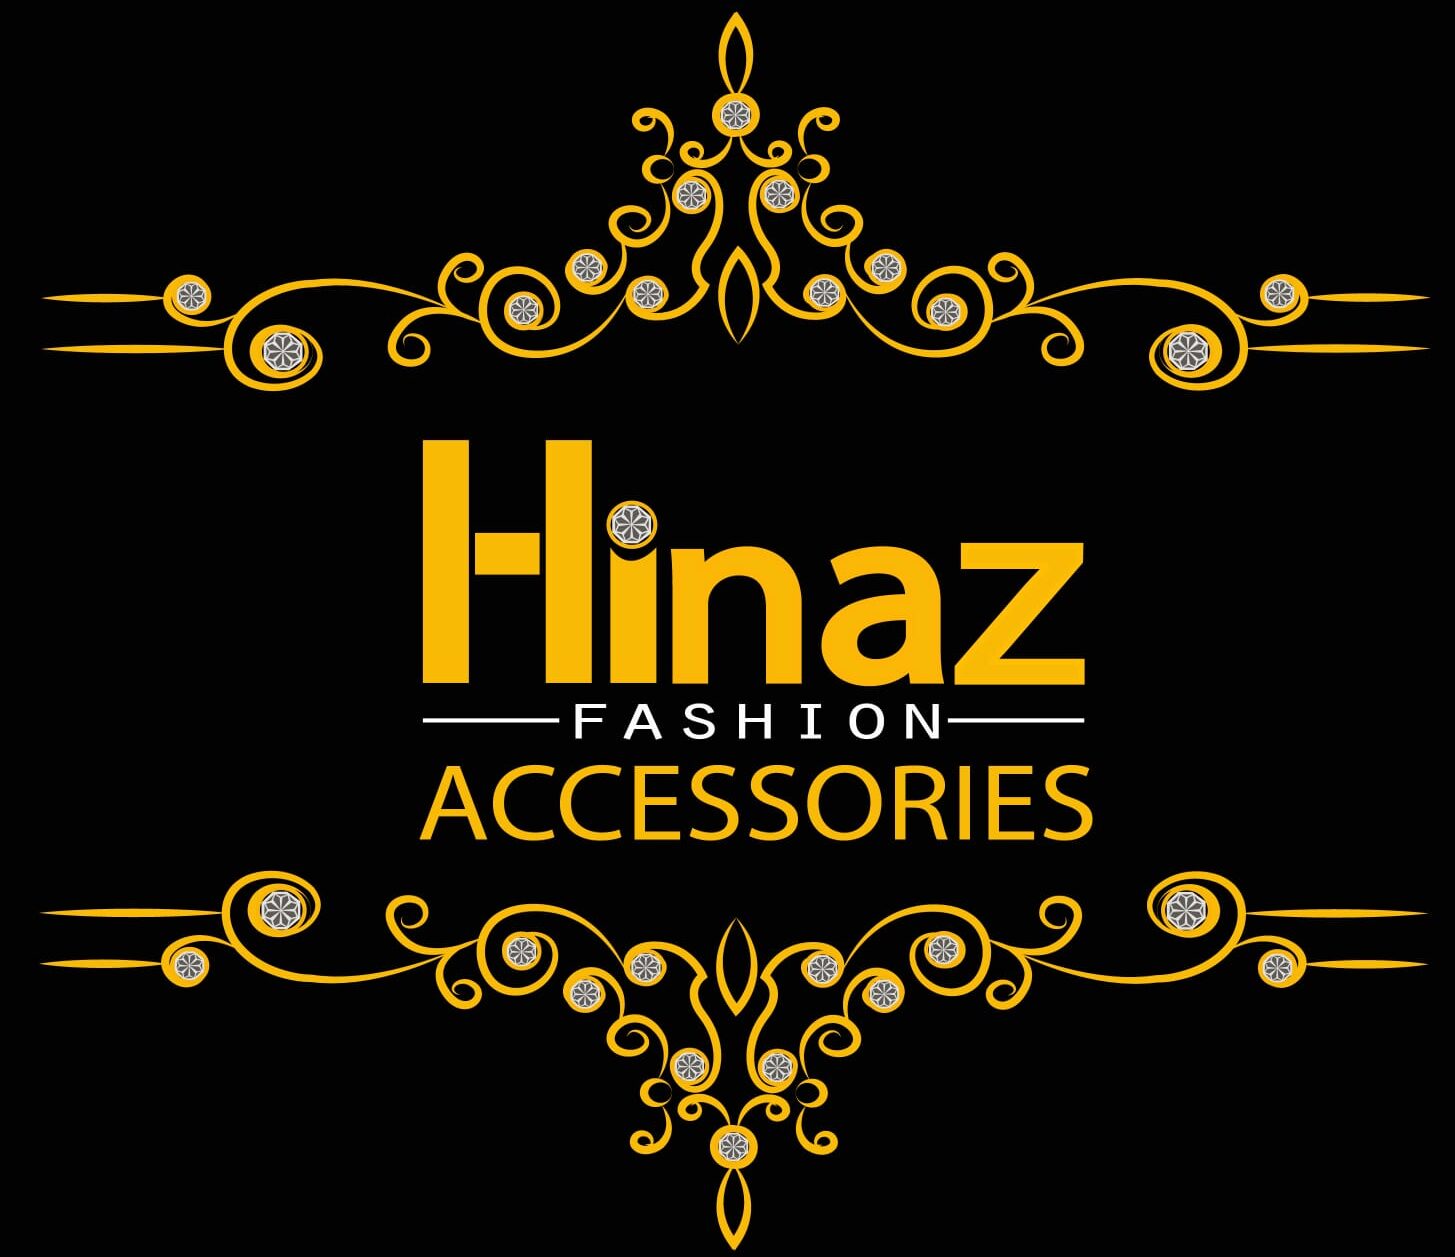 Hinaz Fashion Accessories